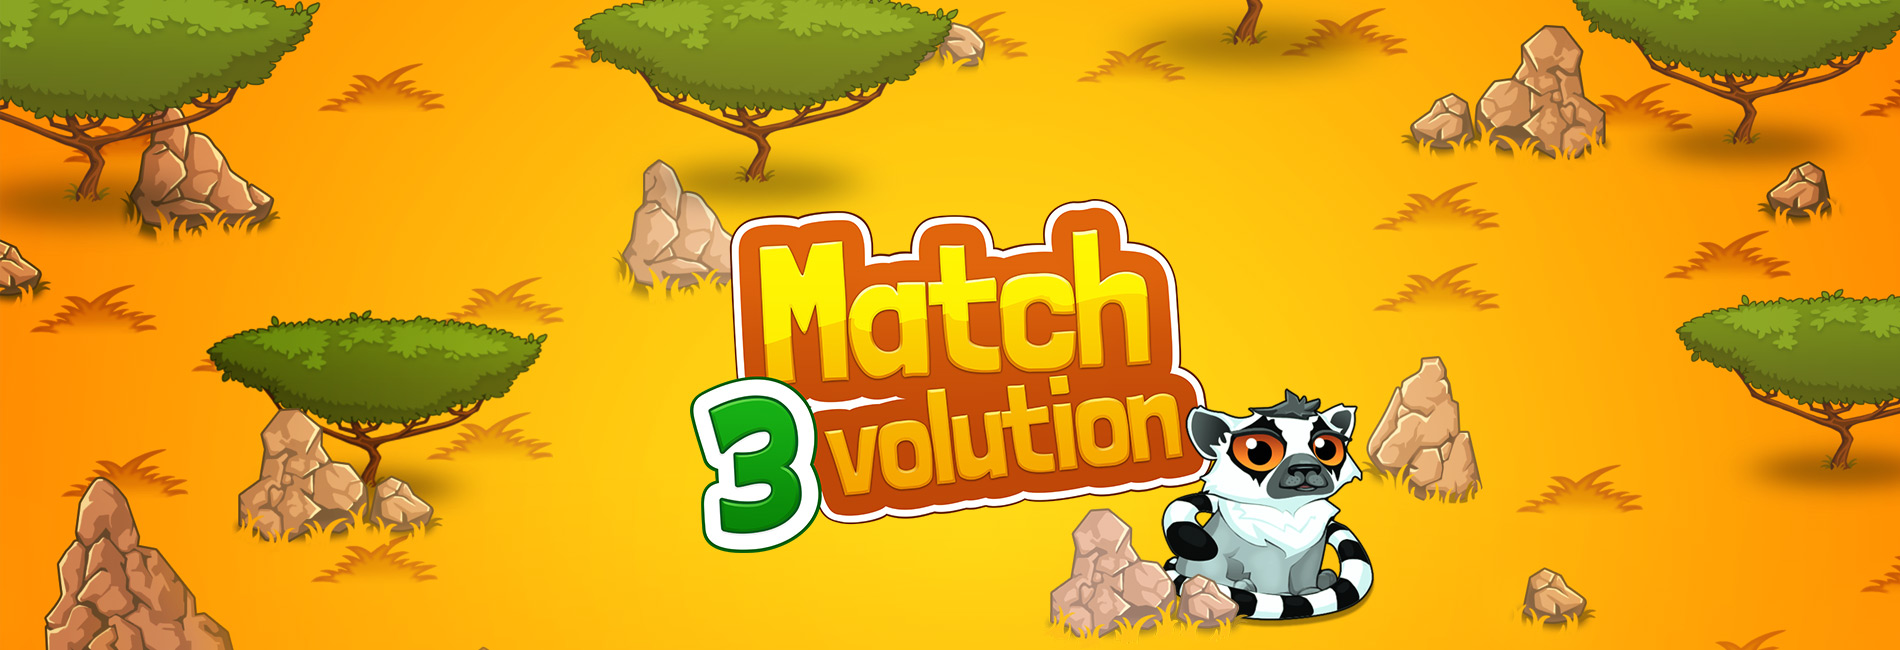 Match 3volution